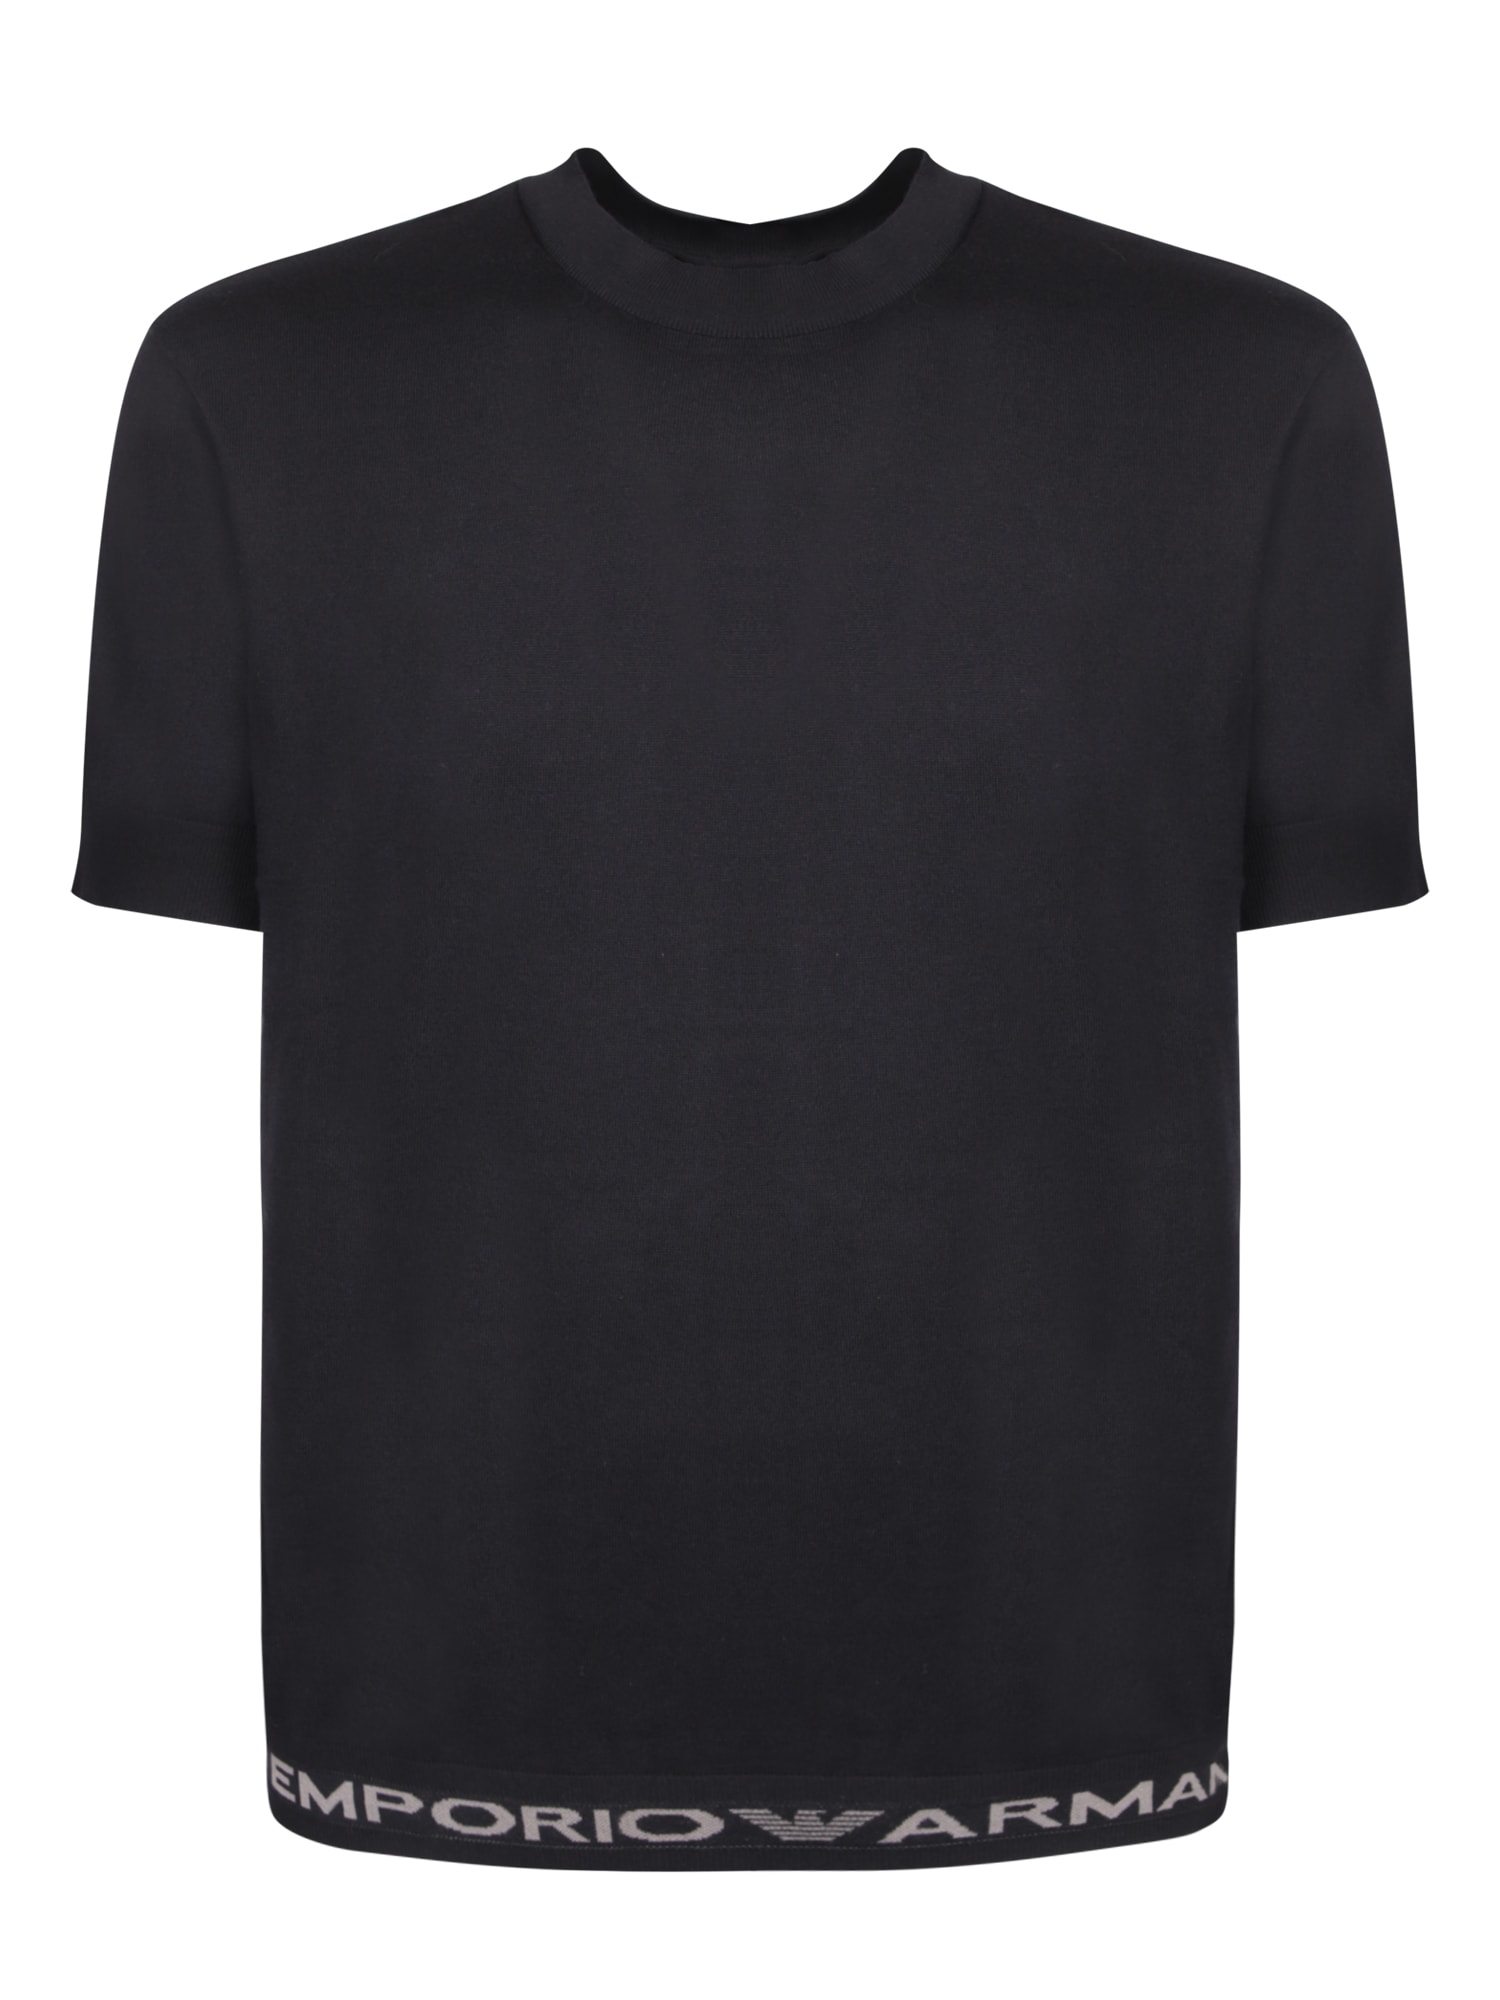 Emporio Armani Knit Profiles Black T-shirt